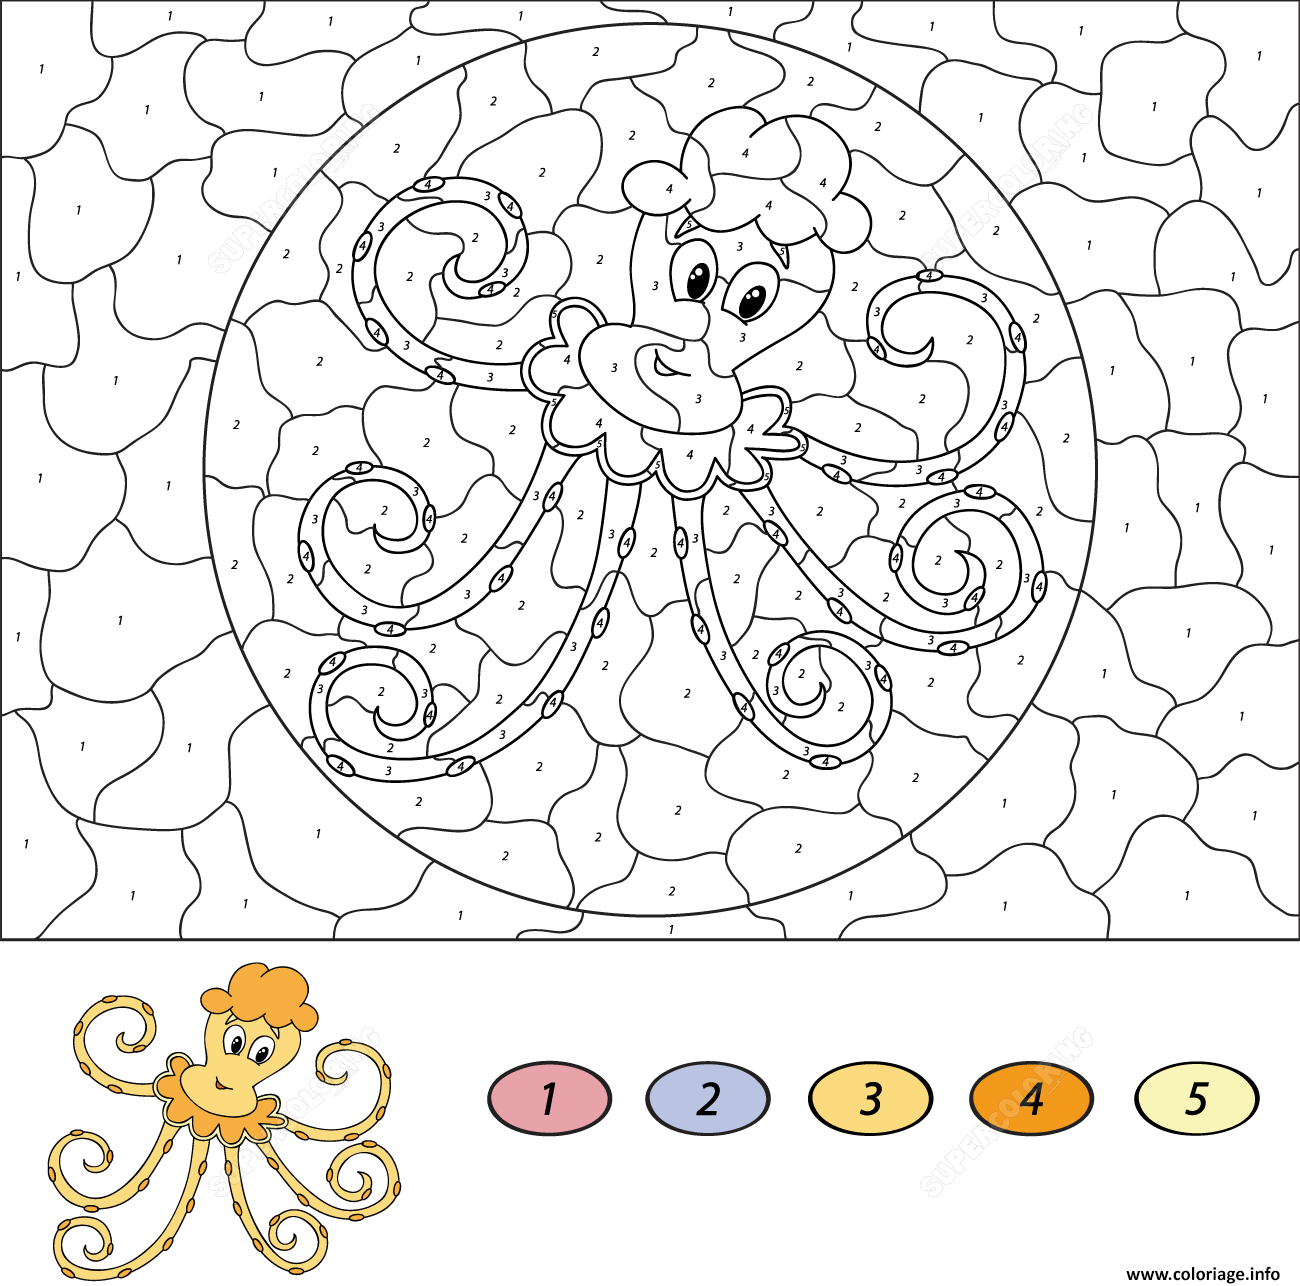 Coloriage cartoon octopus magique - JeColorie.com